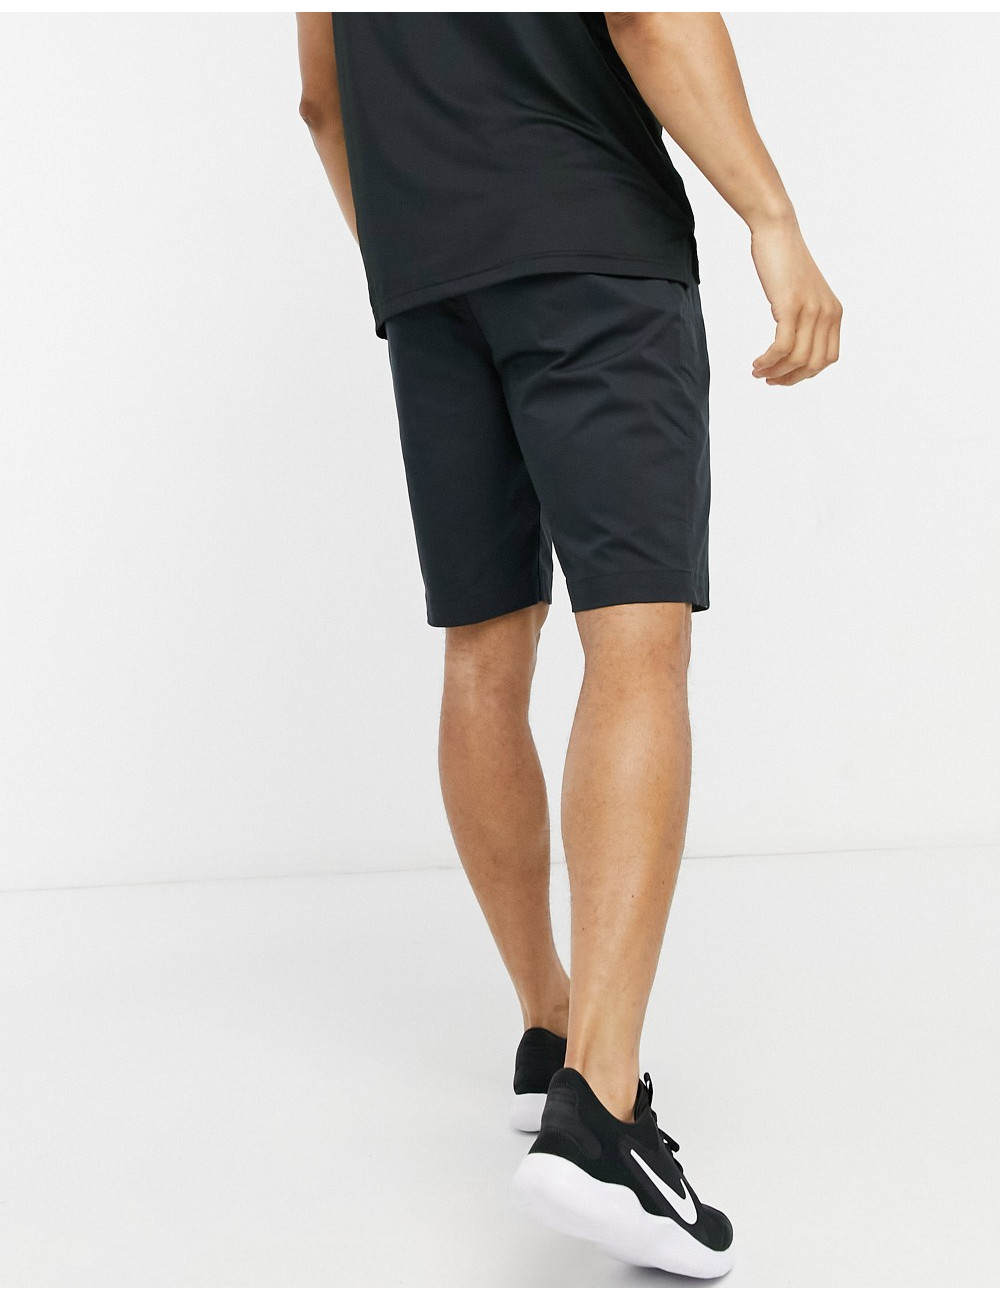 Nike Golf Dry chino shorts...